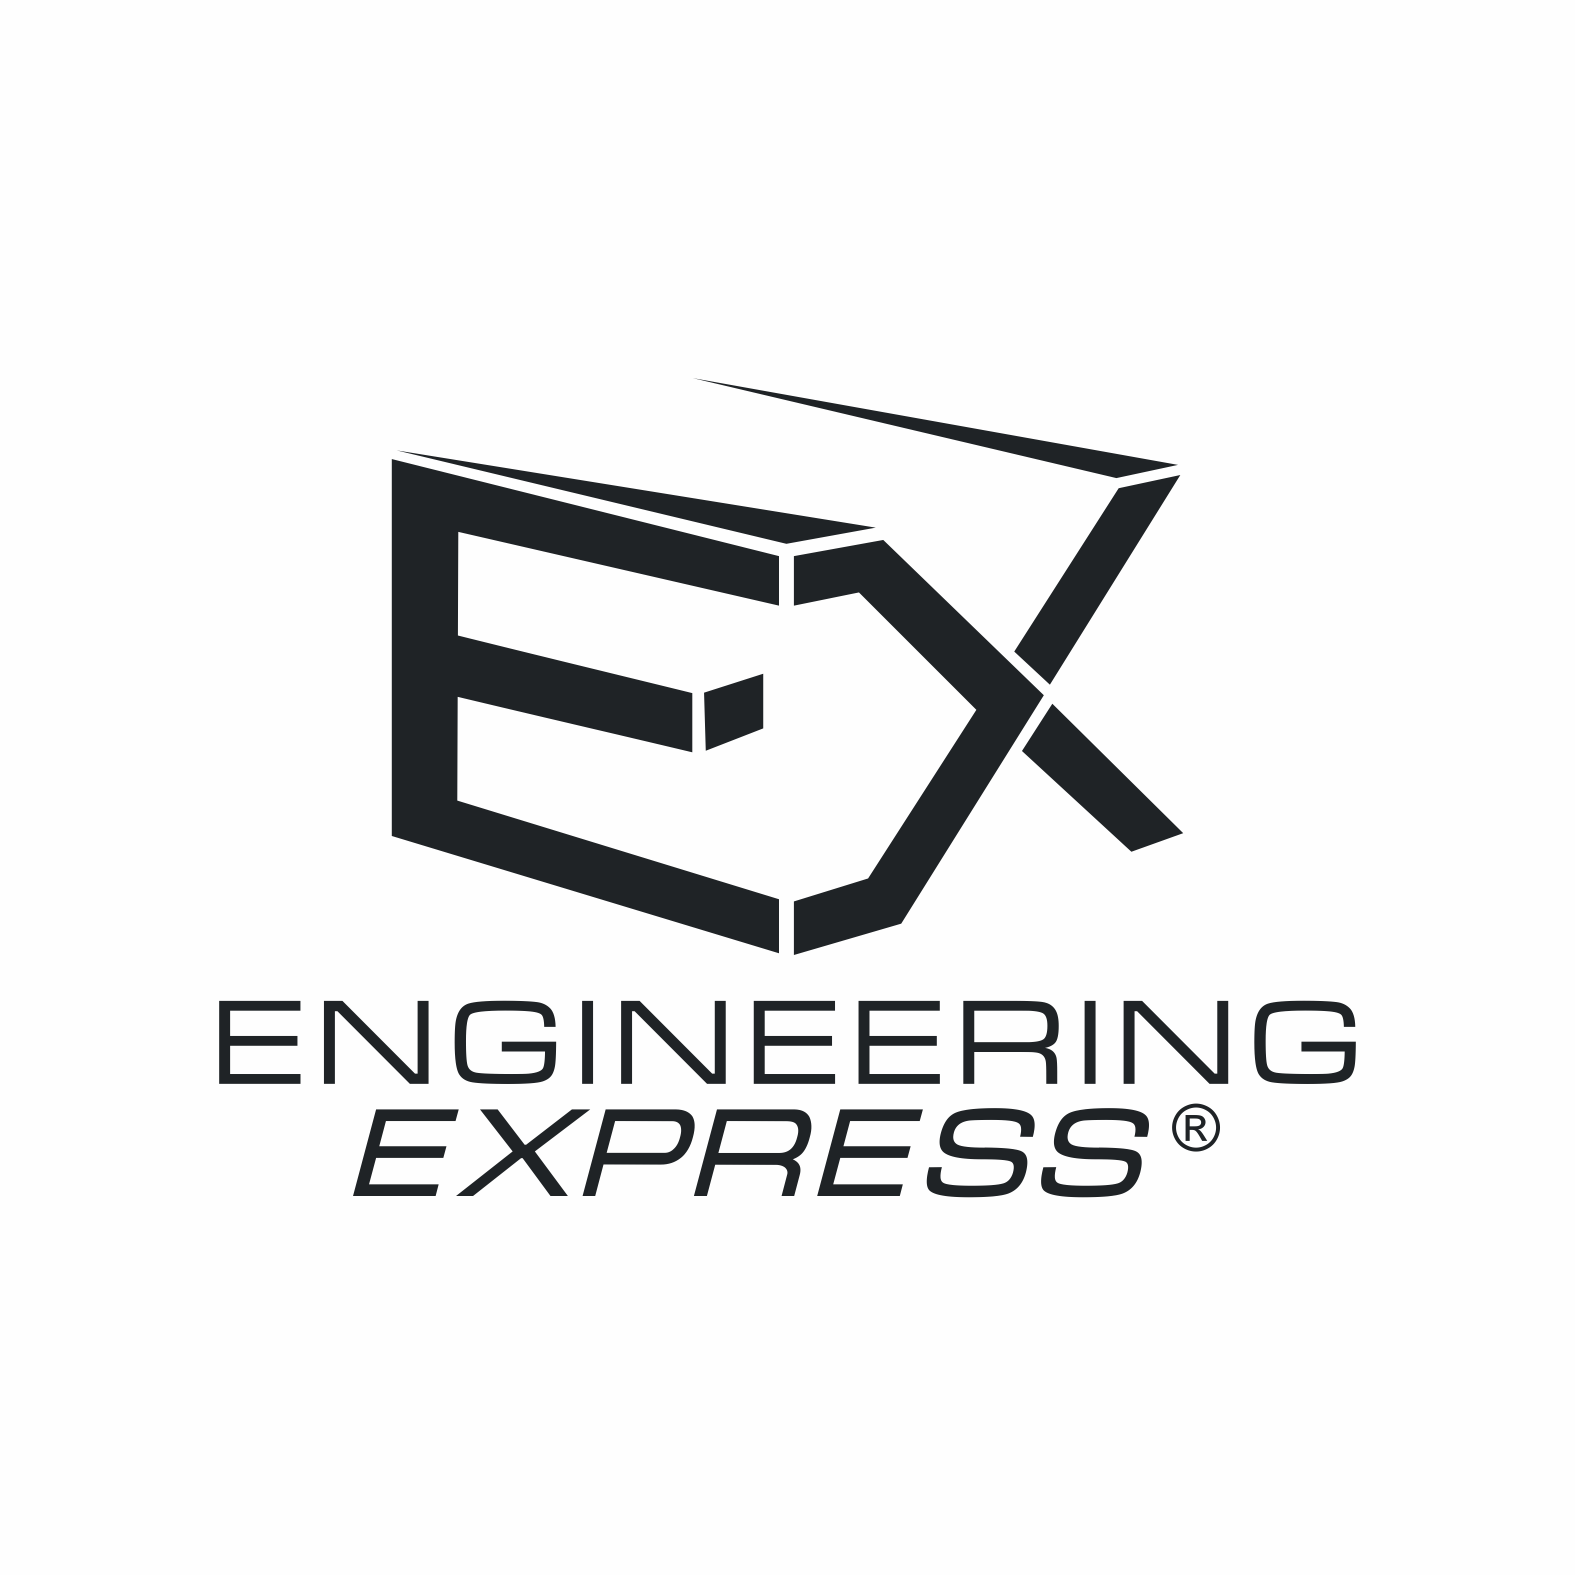 Engineering Express®